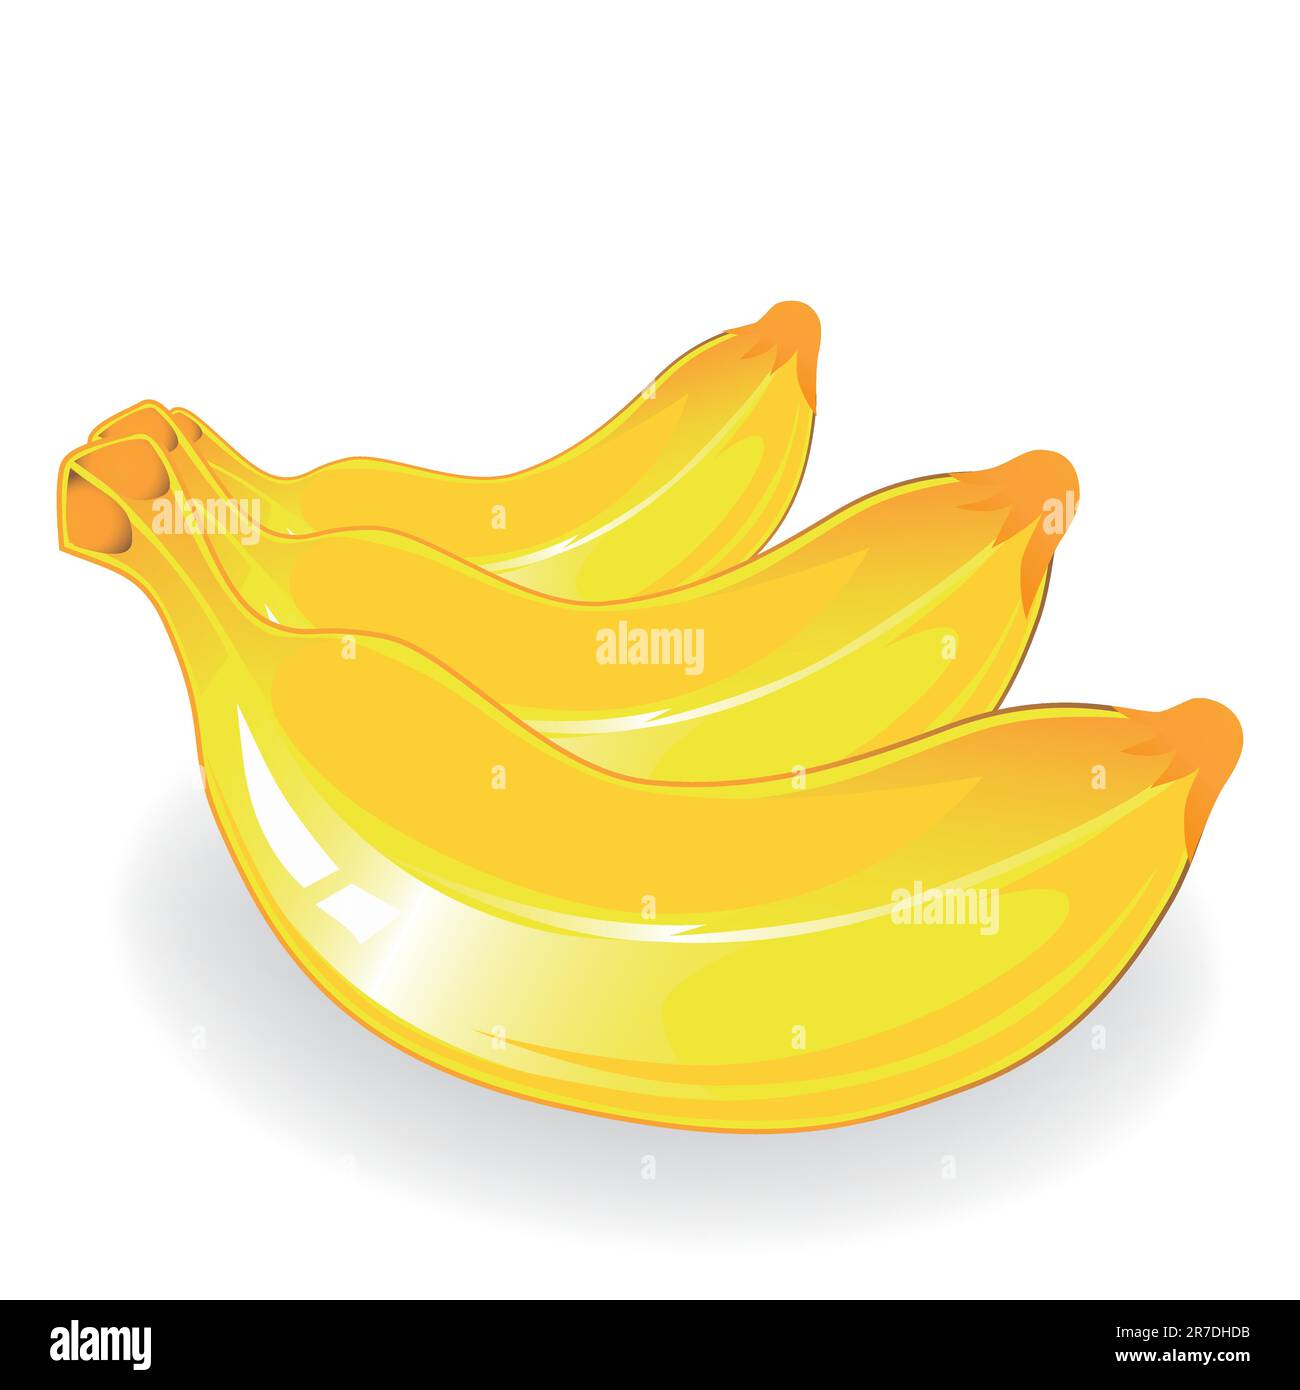 https://c8.alamy.com/comp/2R7DHDB/three-vector-banana-icon-food-bunch-tropical-fruit-illustration-2R7DHDB.jpg